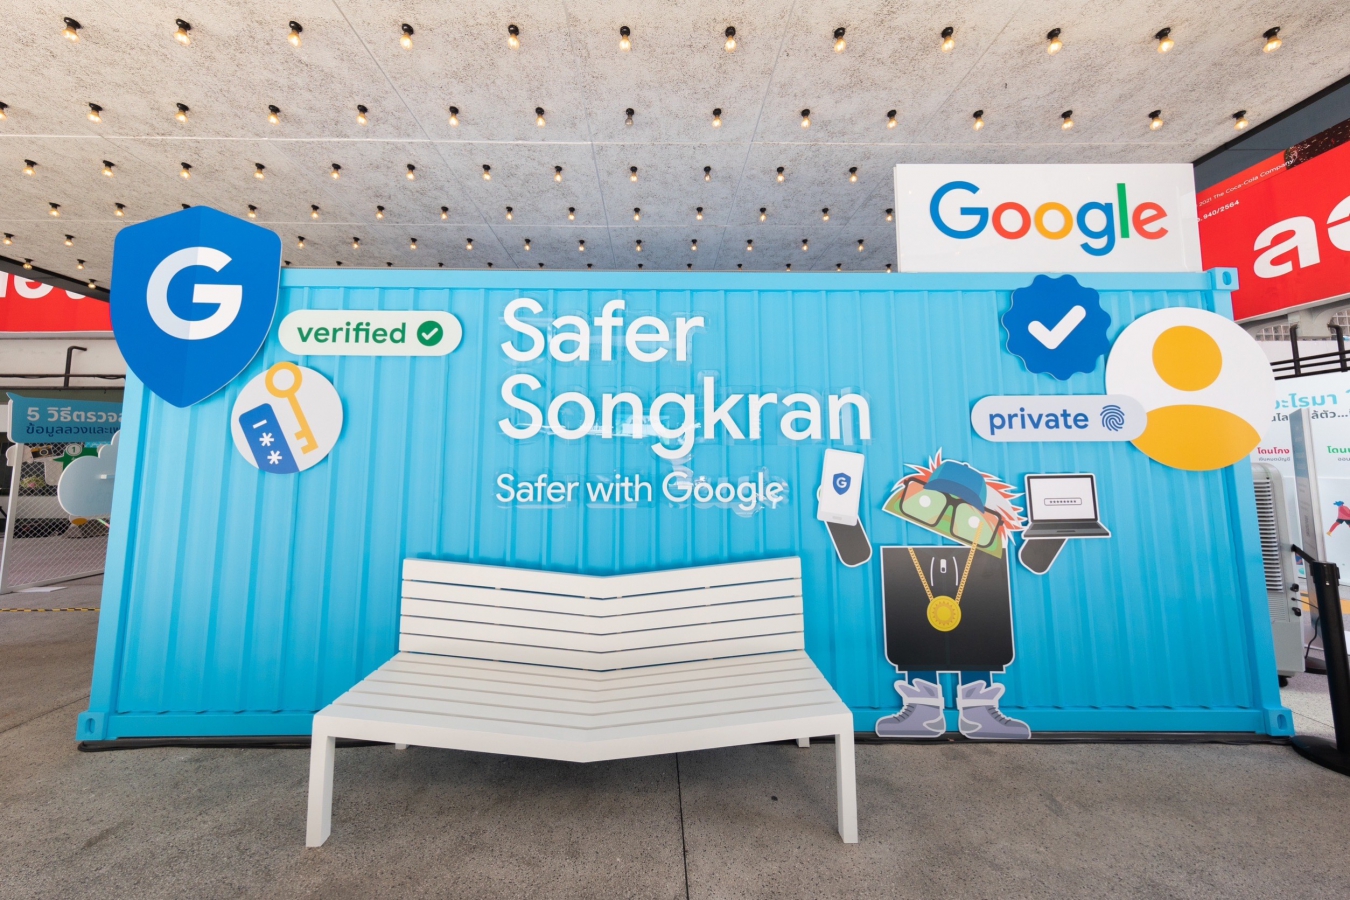 Google ชวนร่วมป็อปอัพอีเว้นท์ “Safer Songkran” เพิ่มทักษะดิจิทัลผ่านกิจกรรมสนุกๆ ณ ลานหน้า Lido Connect สยามสแควร์ ระหว่างวันที่ 29 มีนาคม – 2 เมษายนนี้ เวลา 10:00 – 20:00 น.